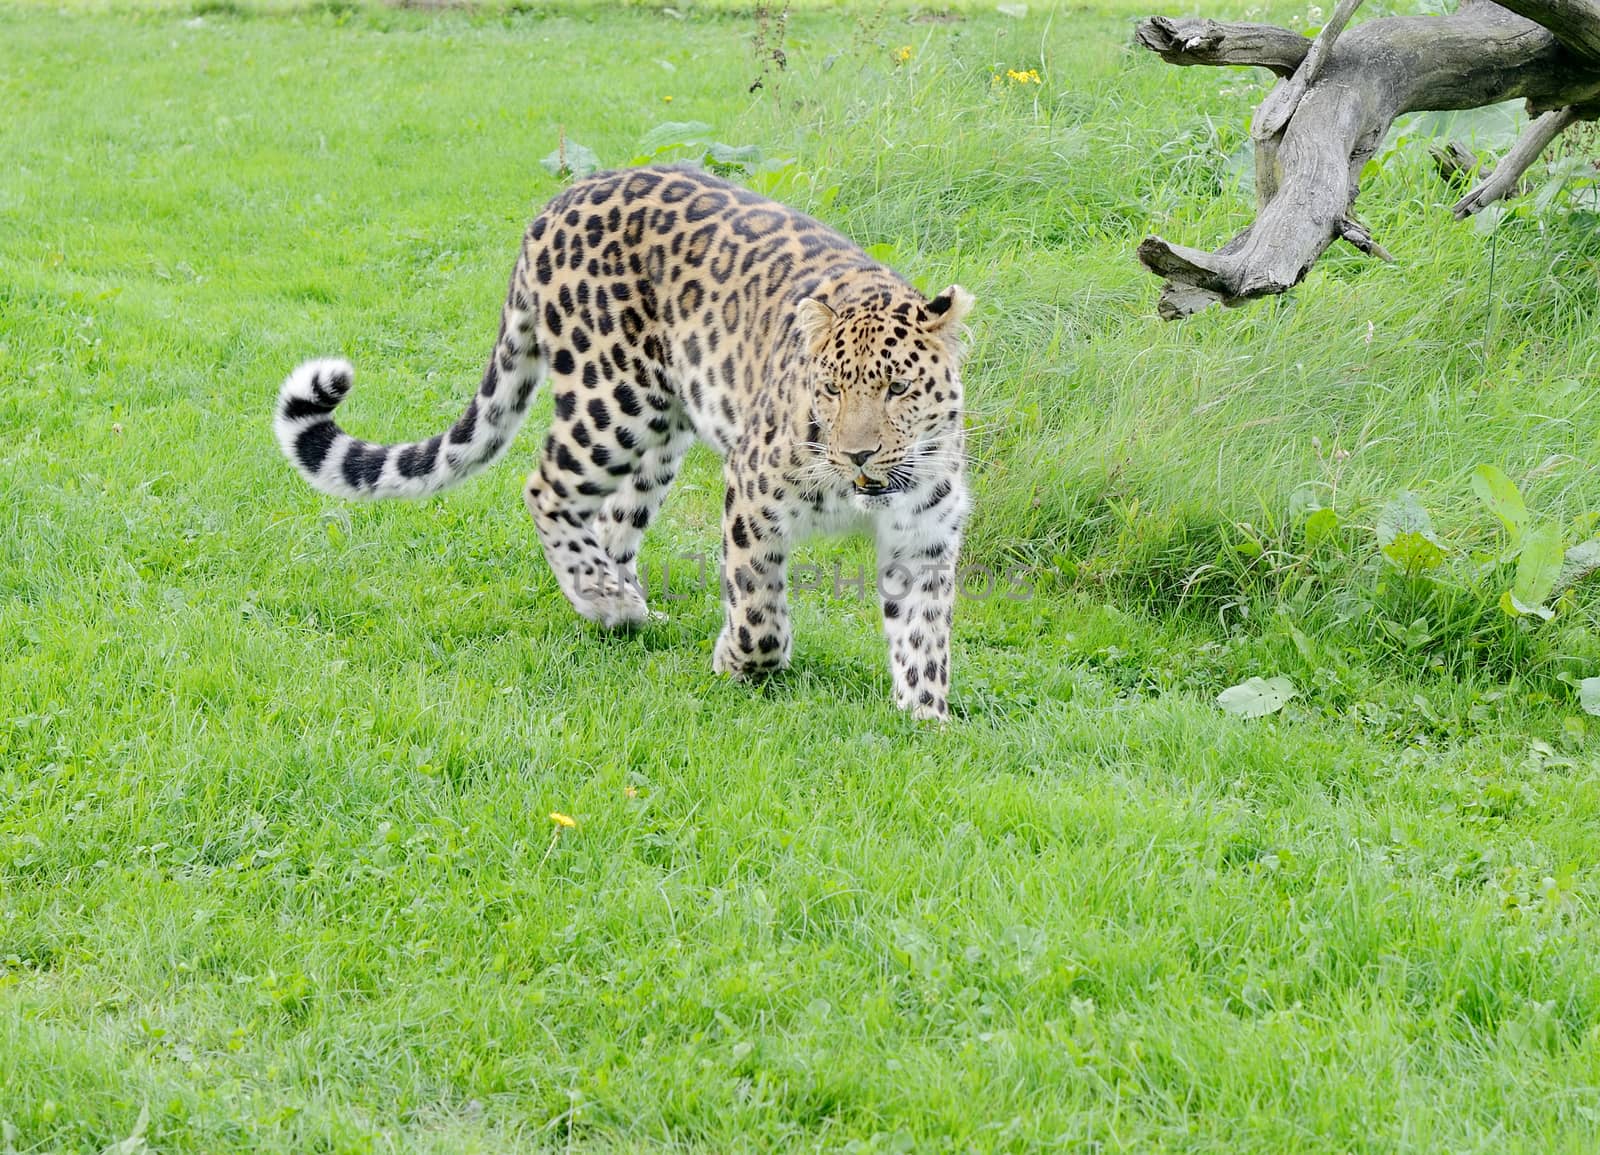 Leopard is restless walking in the grass